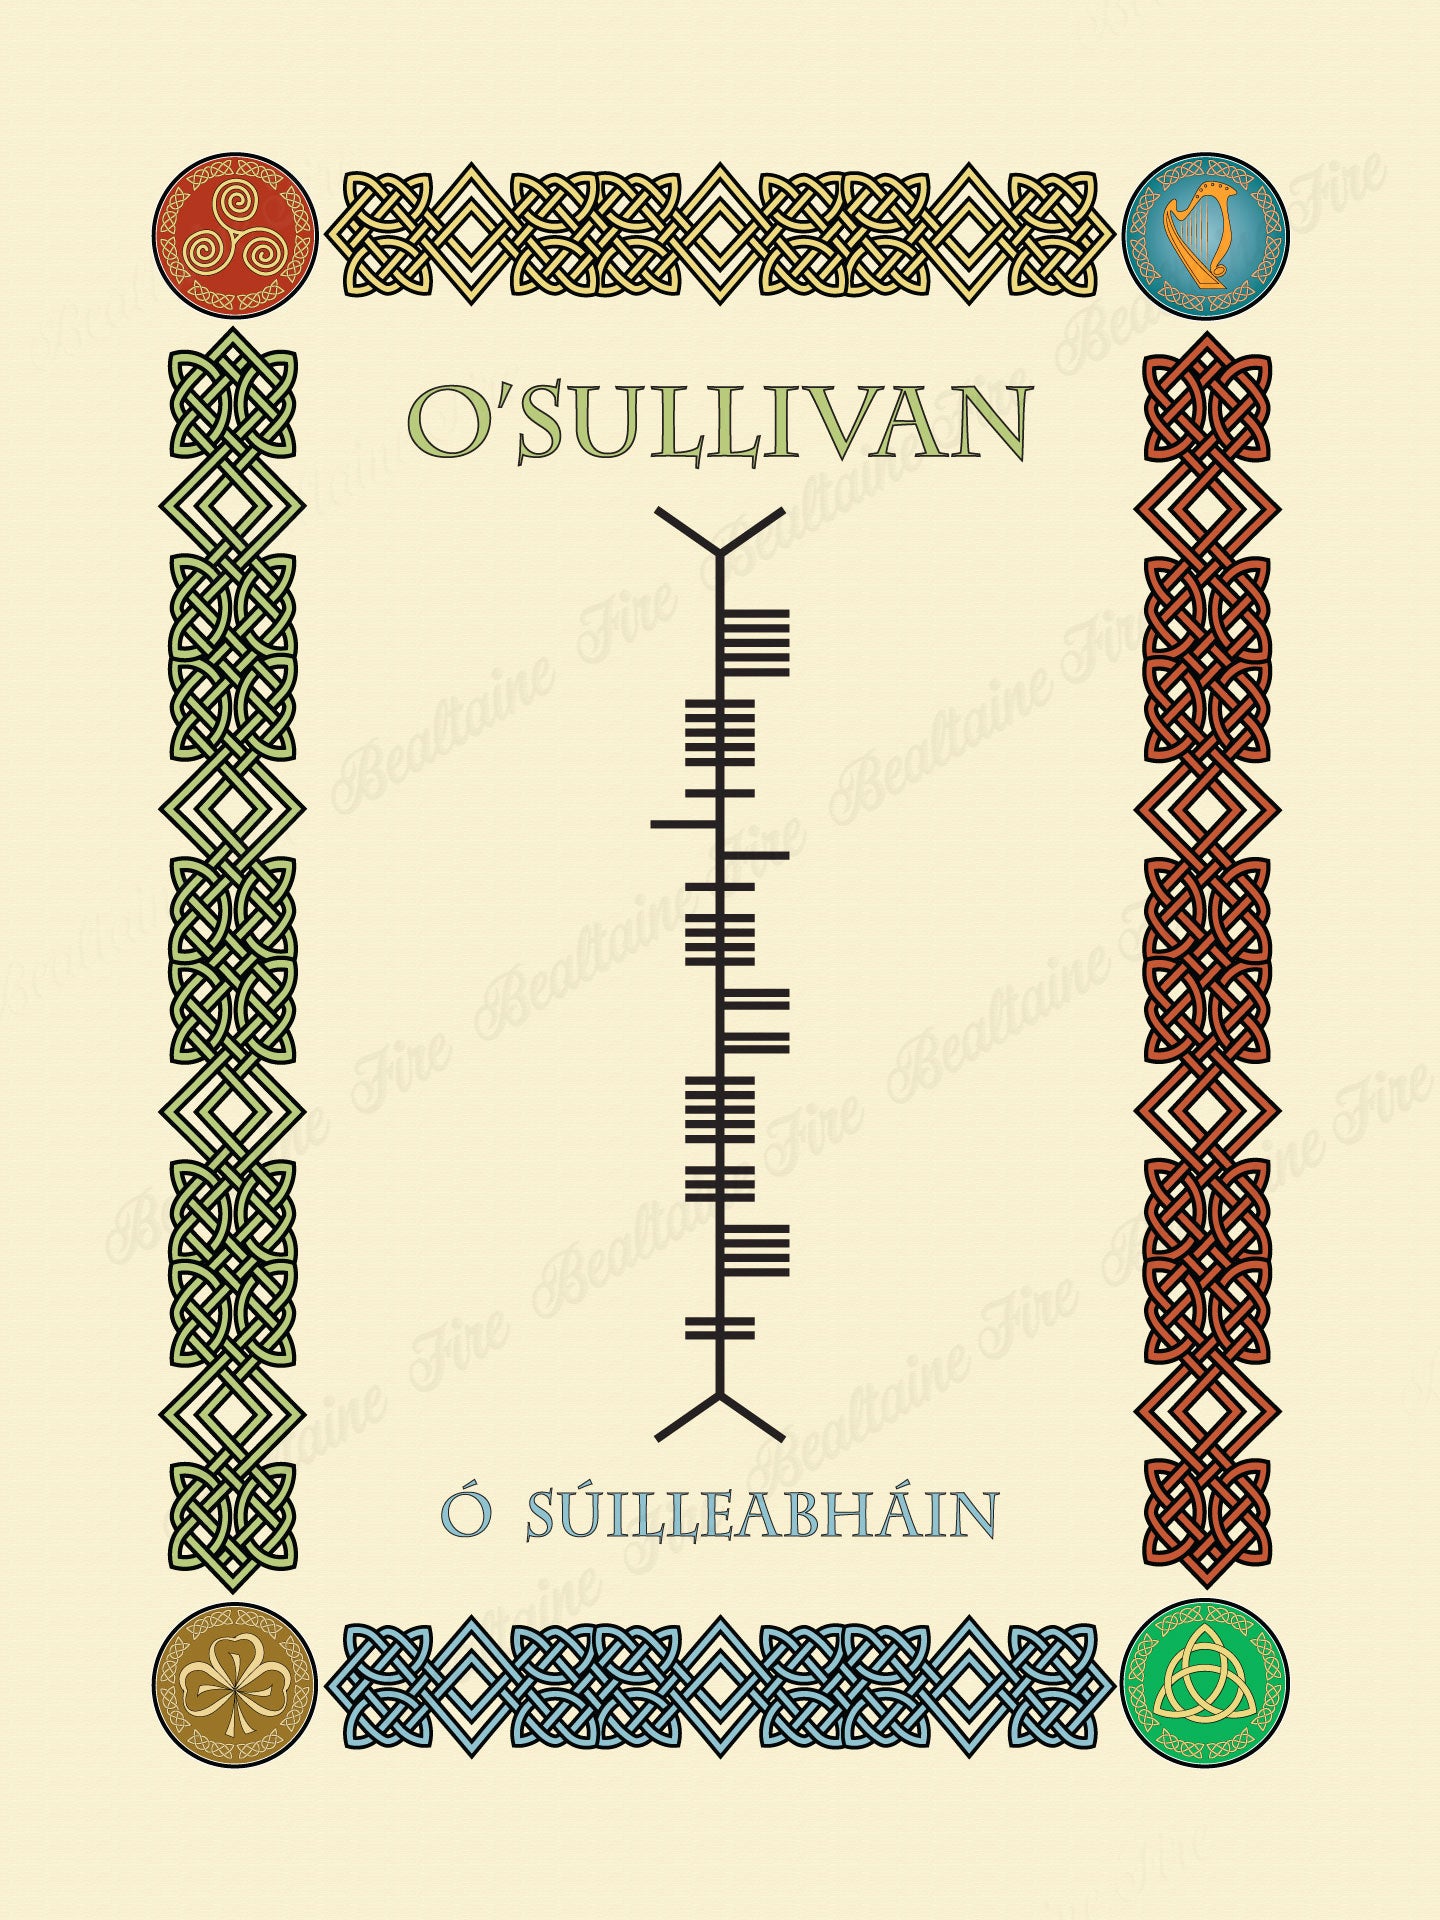 O'Sullivan in Old Irish and Ogham - Premium luster unframed print